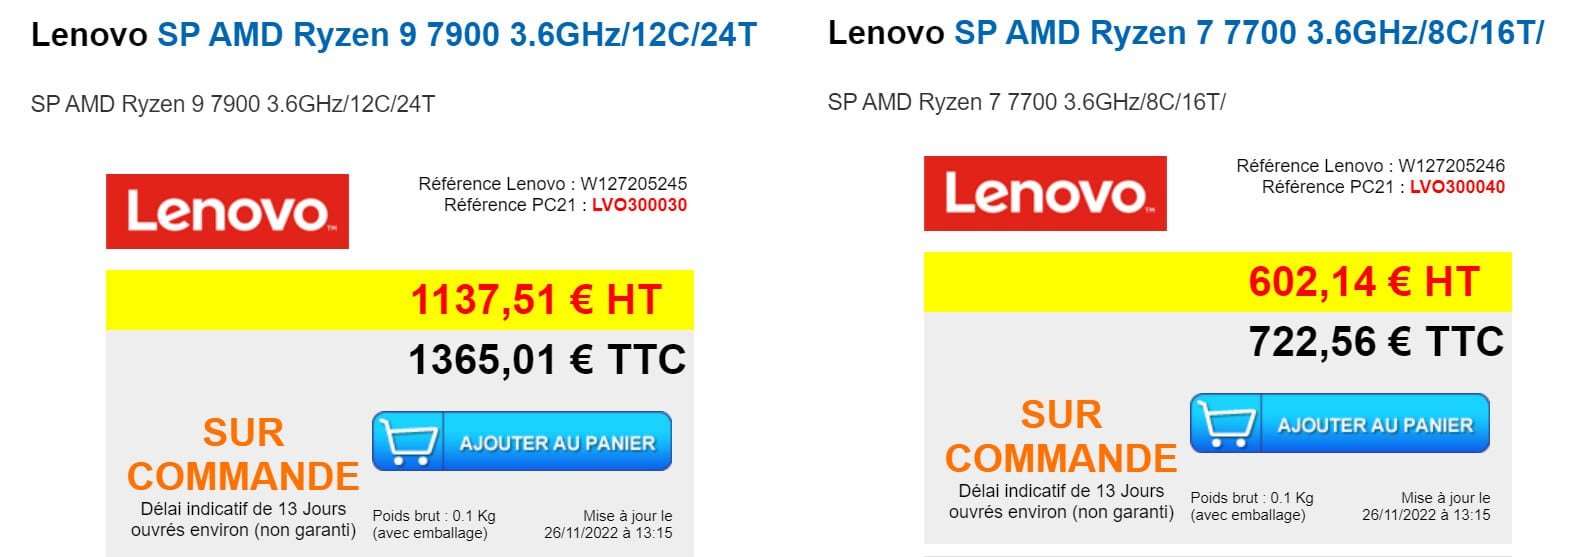 Lenovo تدرج معالج Ryzen 9 7900 و Ryzen 7 7700 كخيارات لأجهزتها